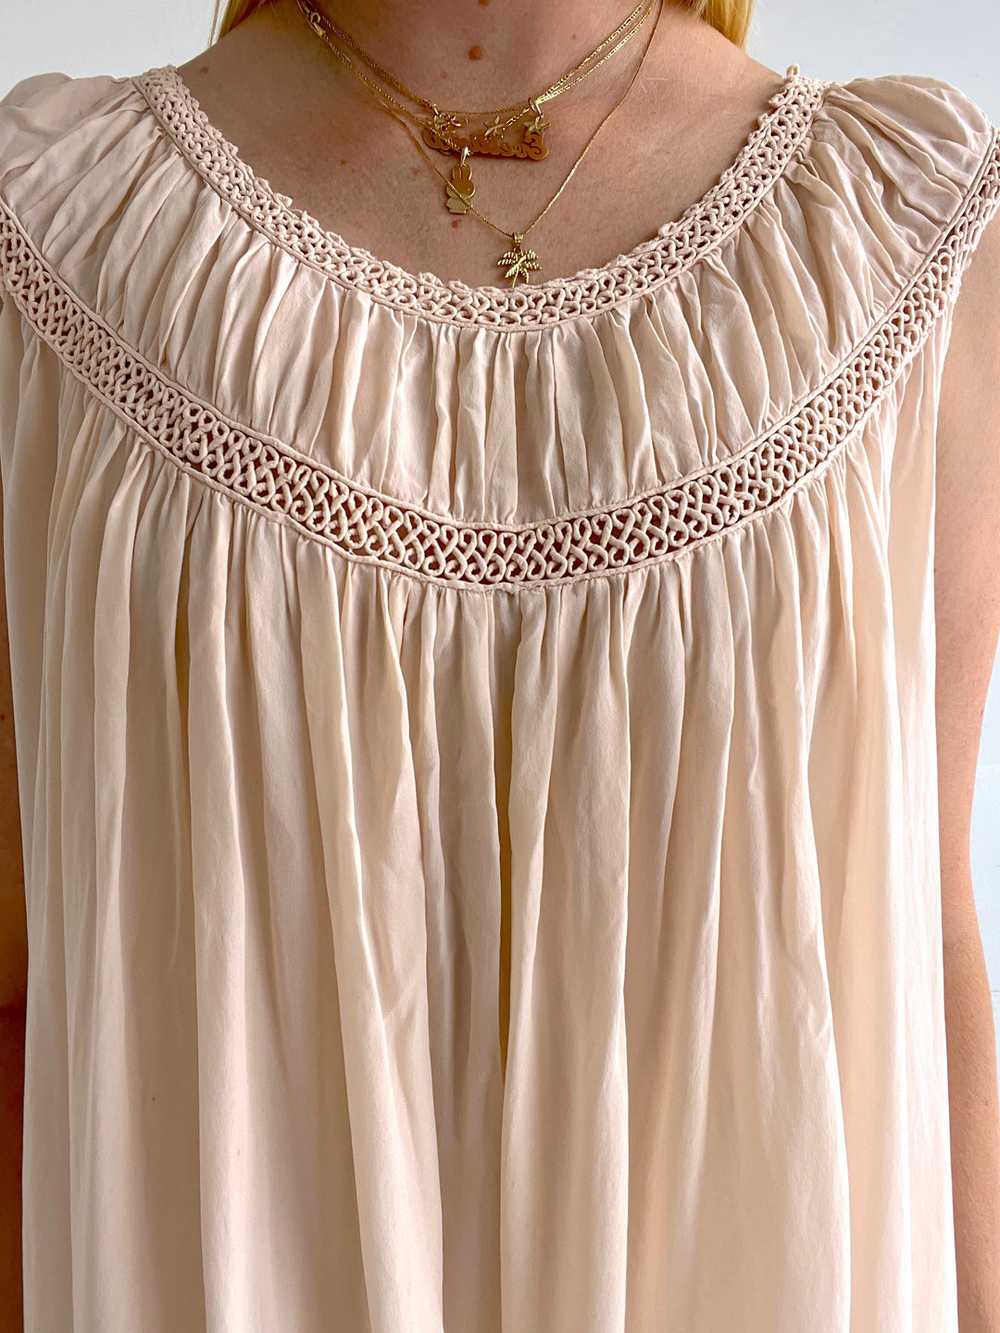 1930's Pale Peach Silk Dress - image 3